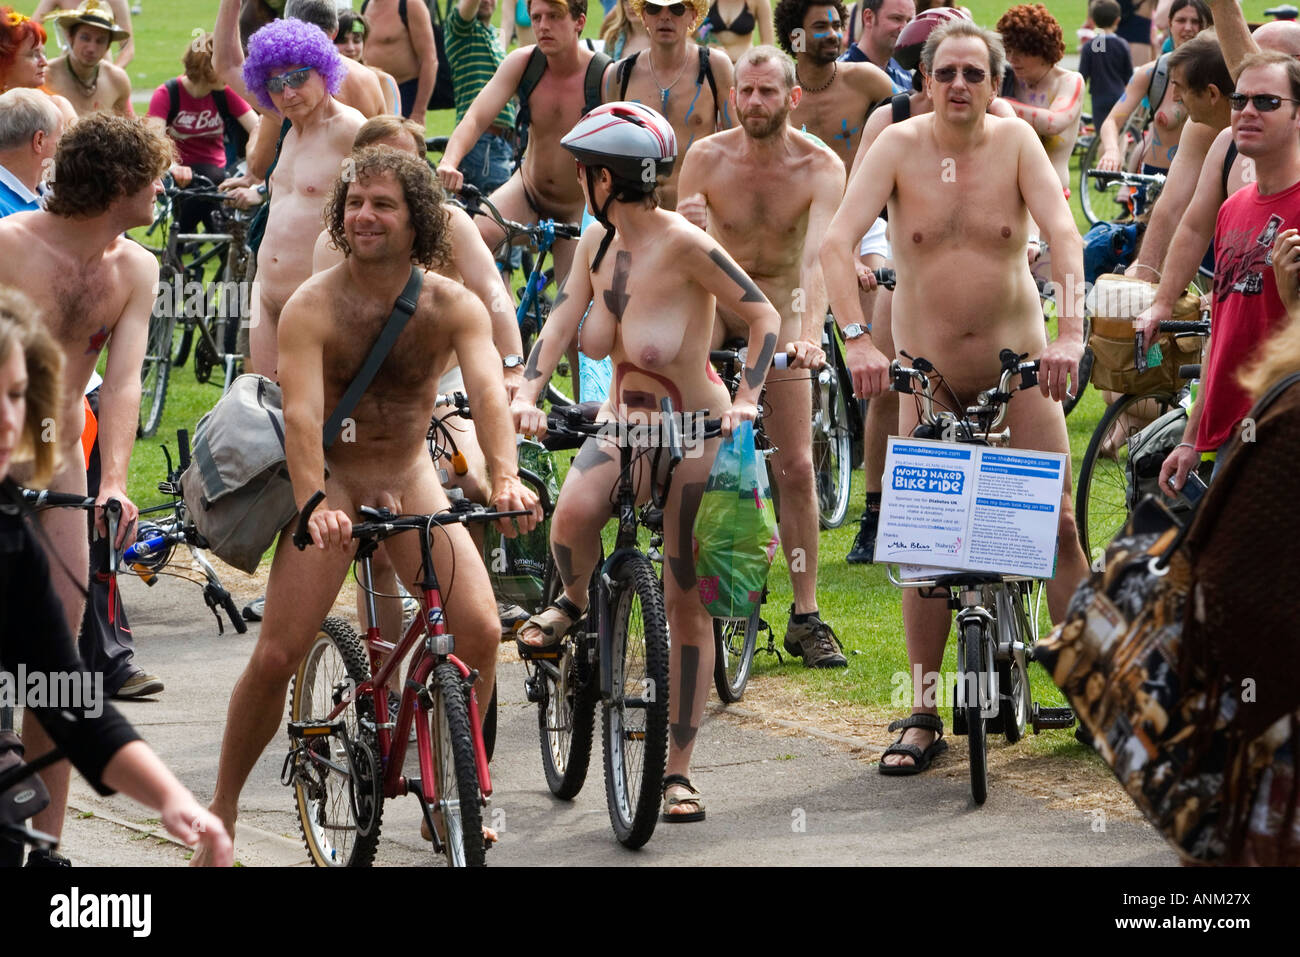 Cyclists Nude 30